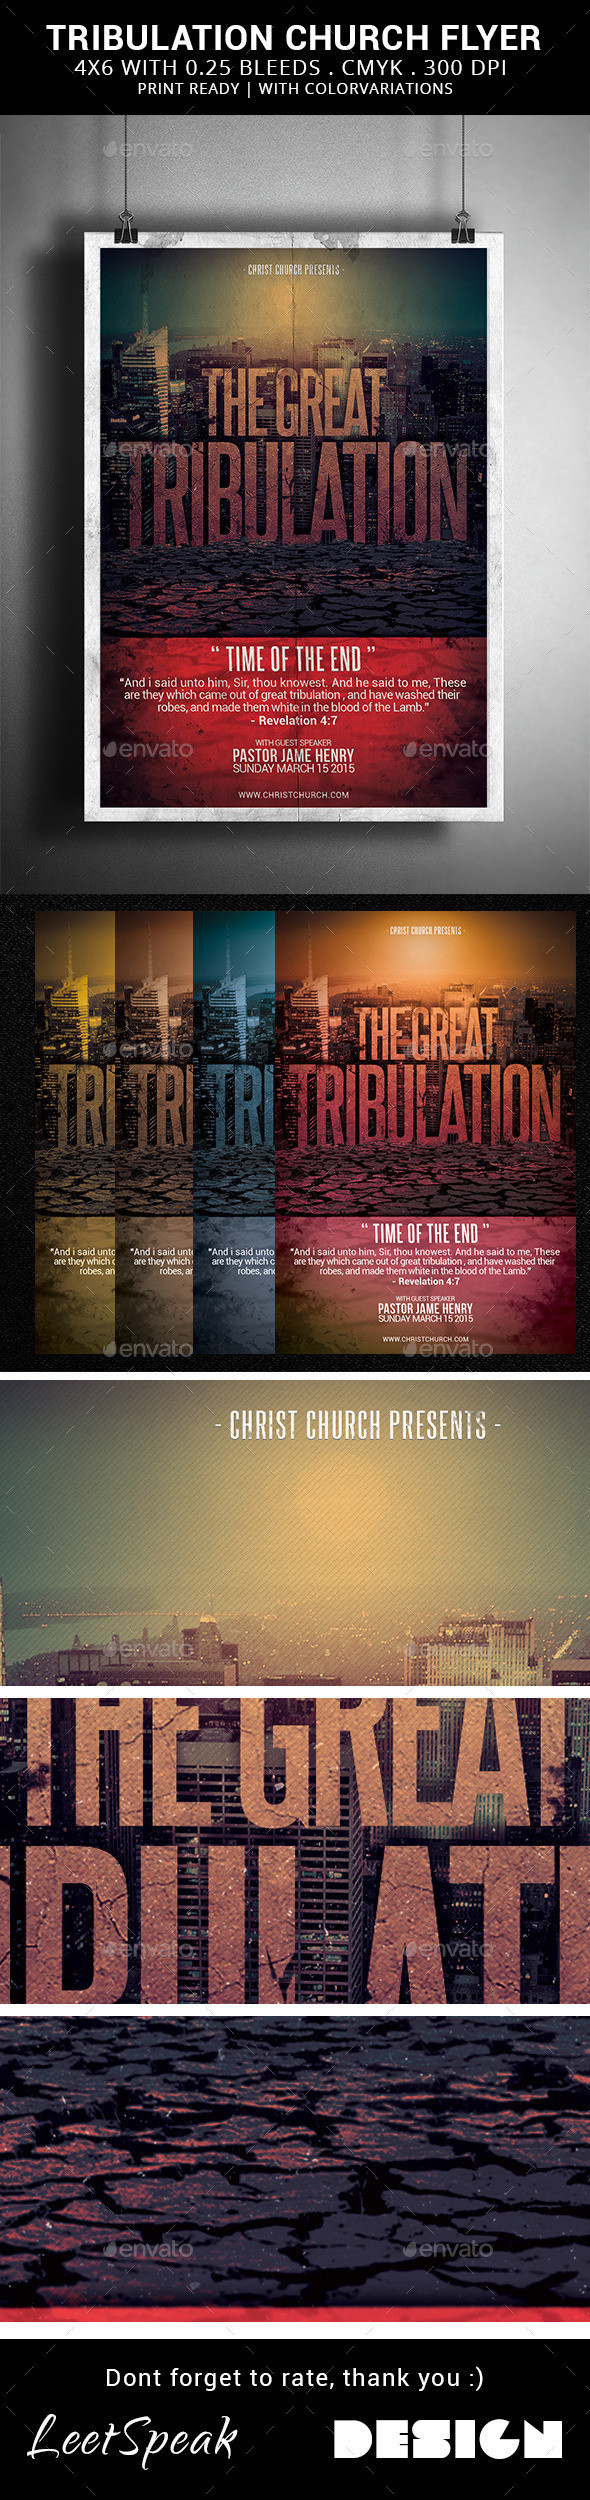 Tribulation church flyer preview